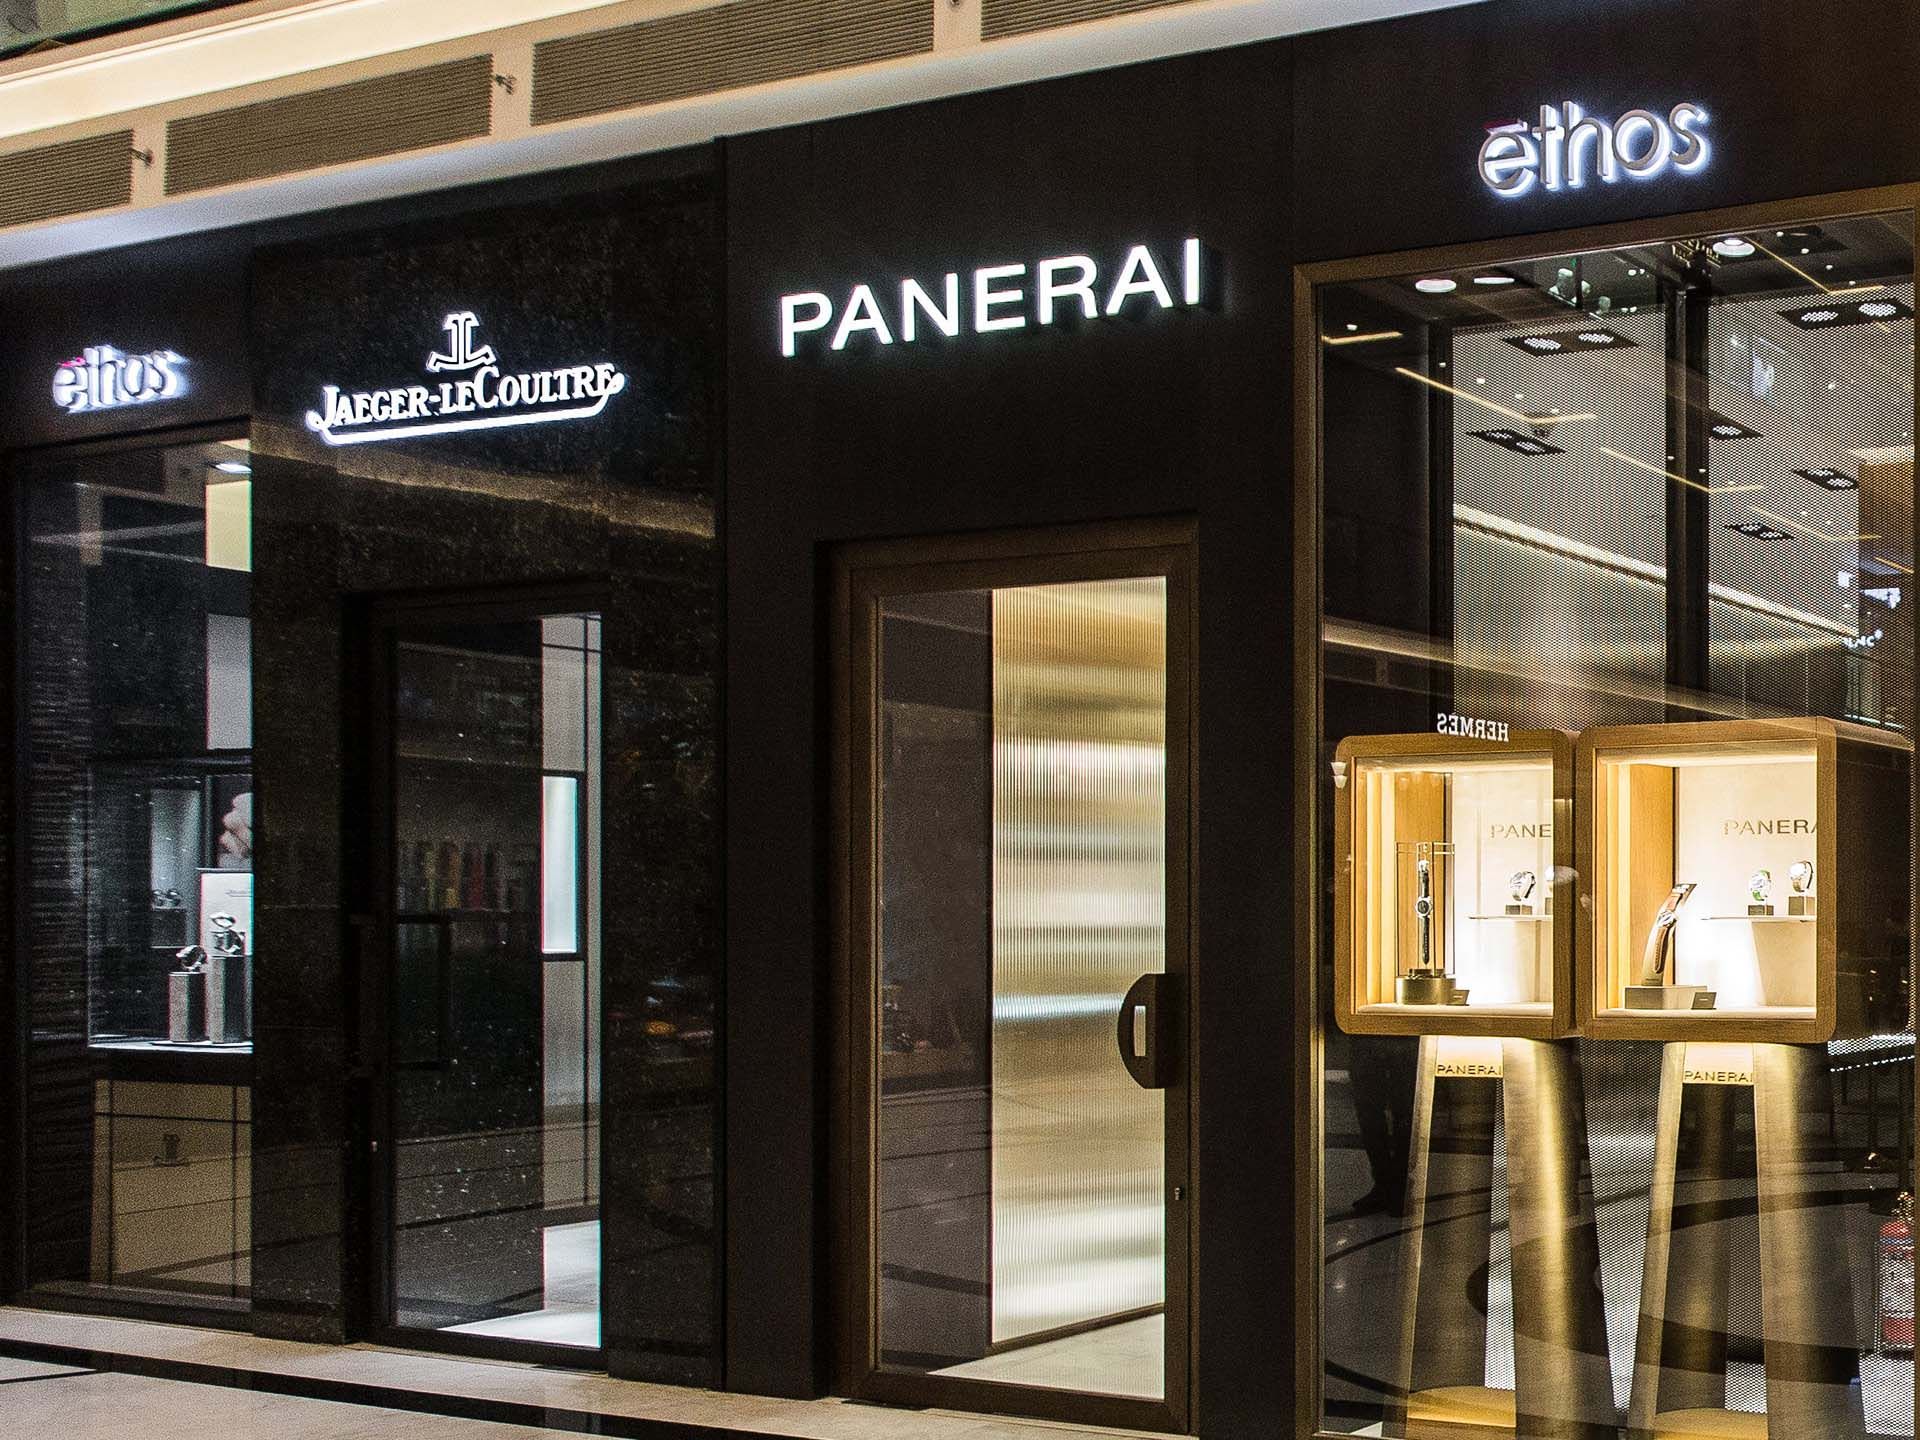 Panerai Boutique - Ethos Watches, New Delhi, Delhi